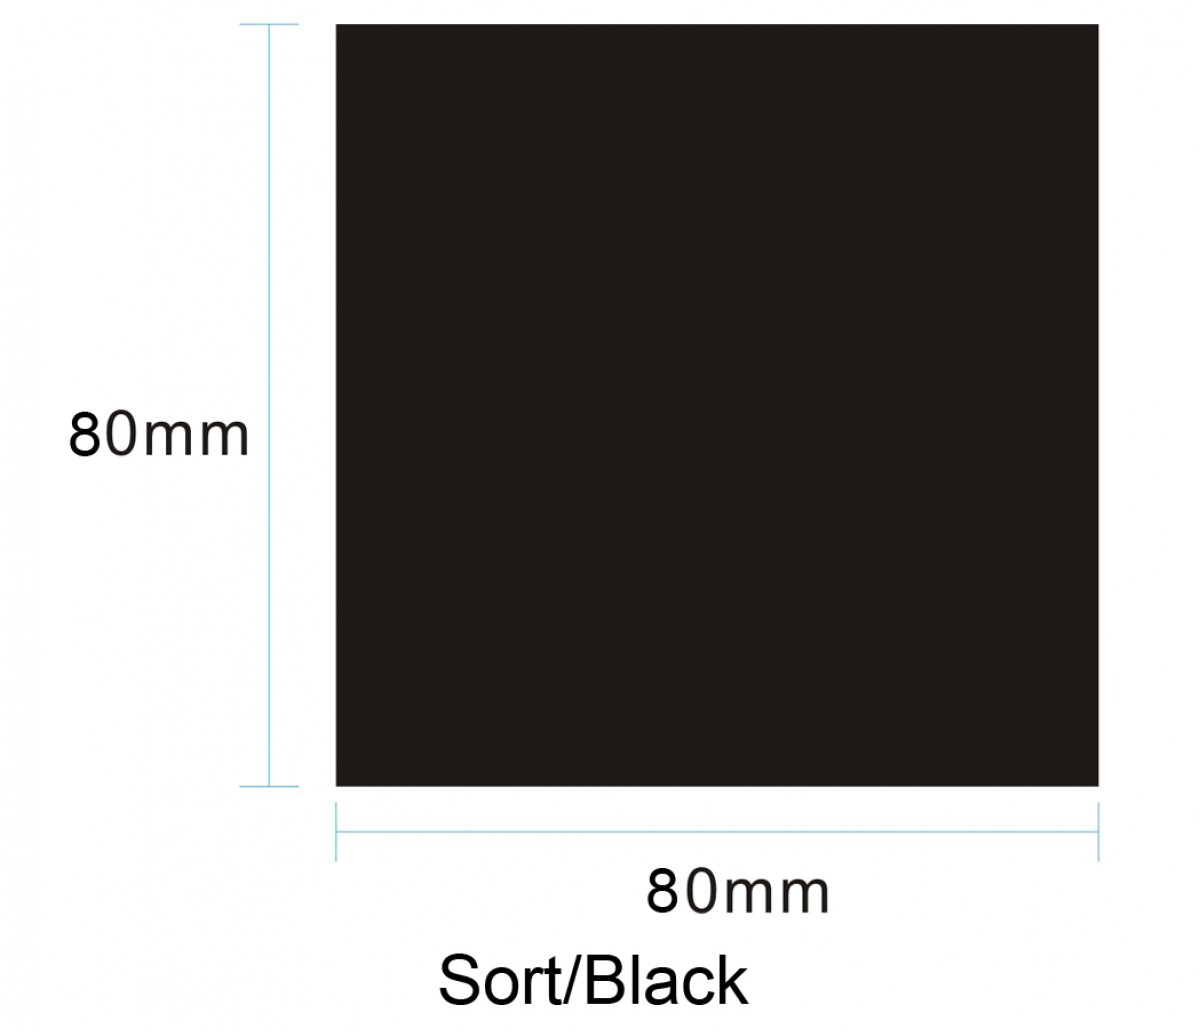 Sort/Black 80x80mm